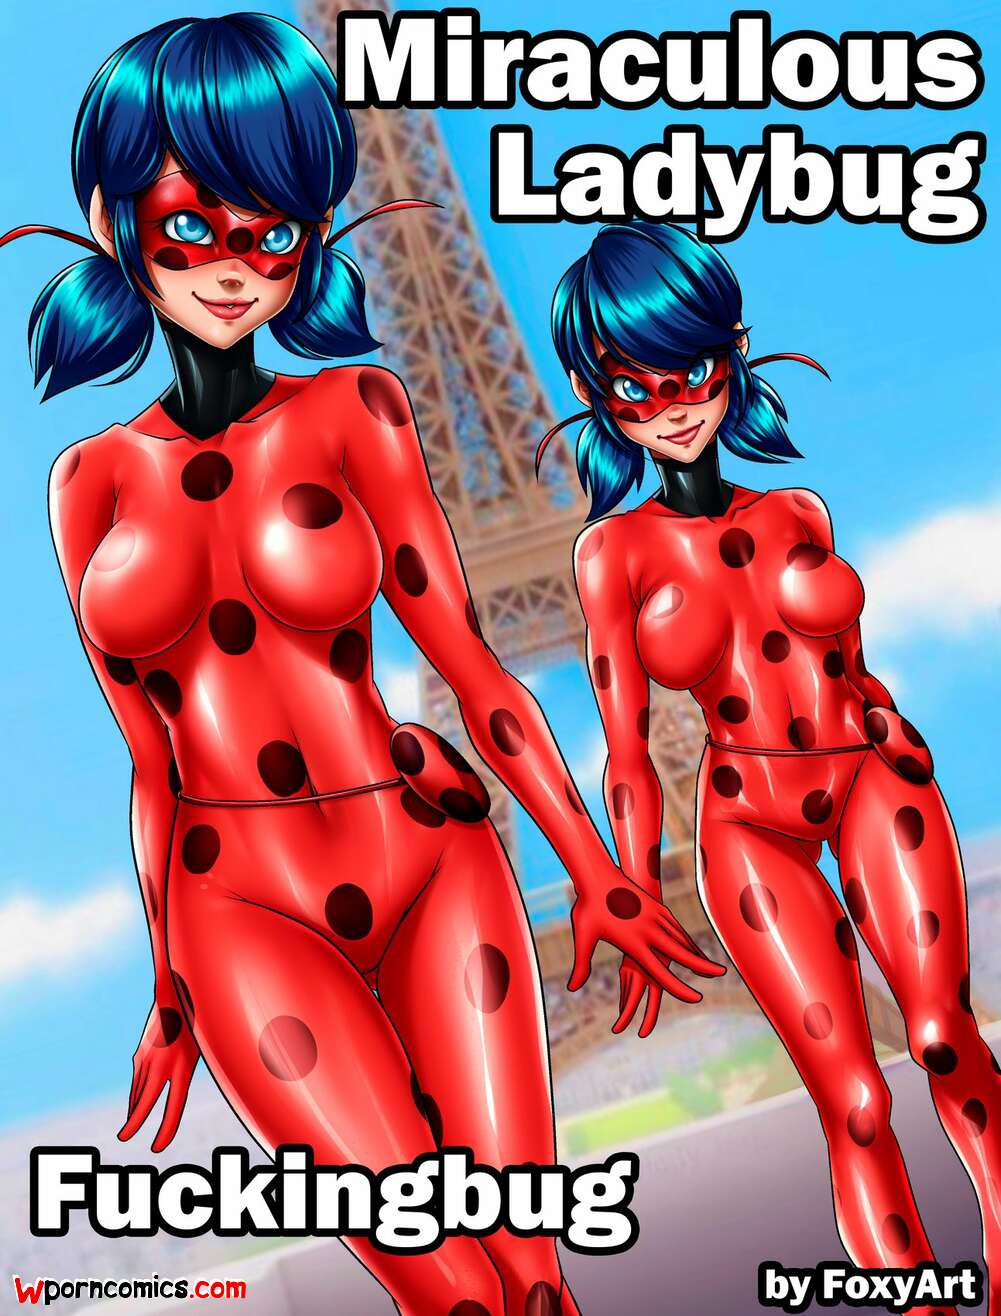 Ladybug girl porn